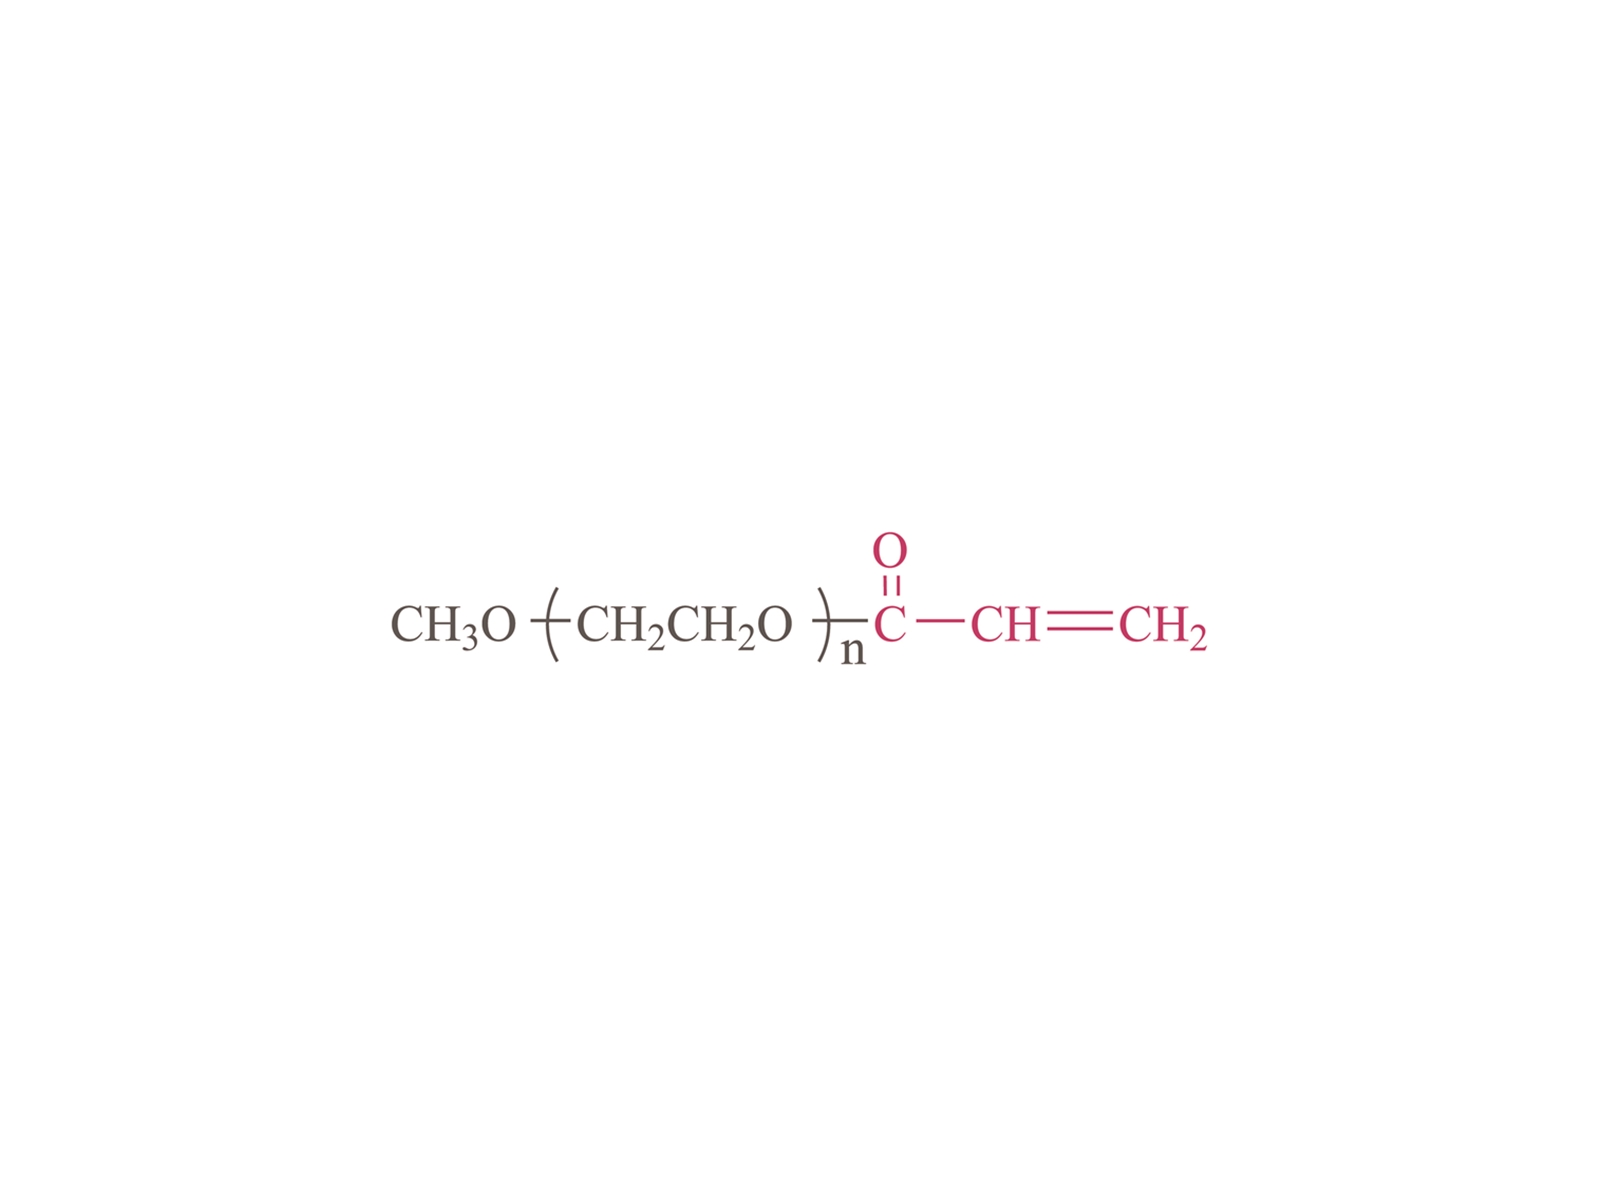 Acrylate de méthoxypolie (Ethylene glycol) [MPEG-AA] CAS: 32171-39-4